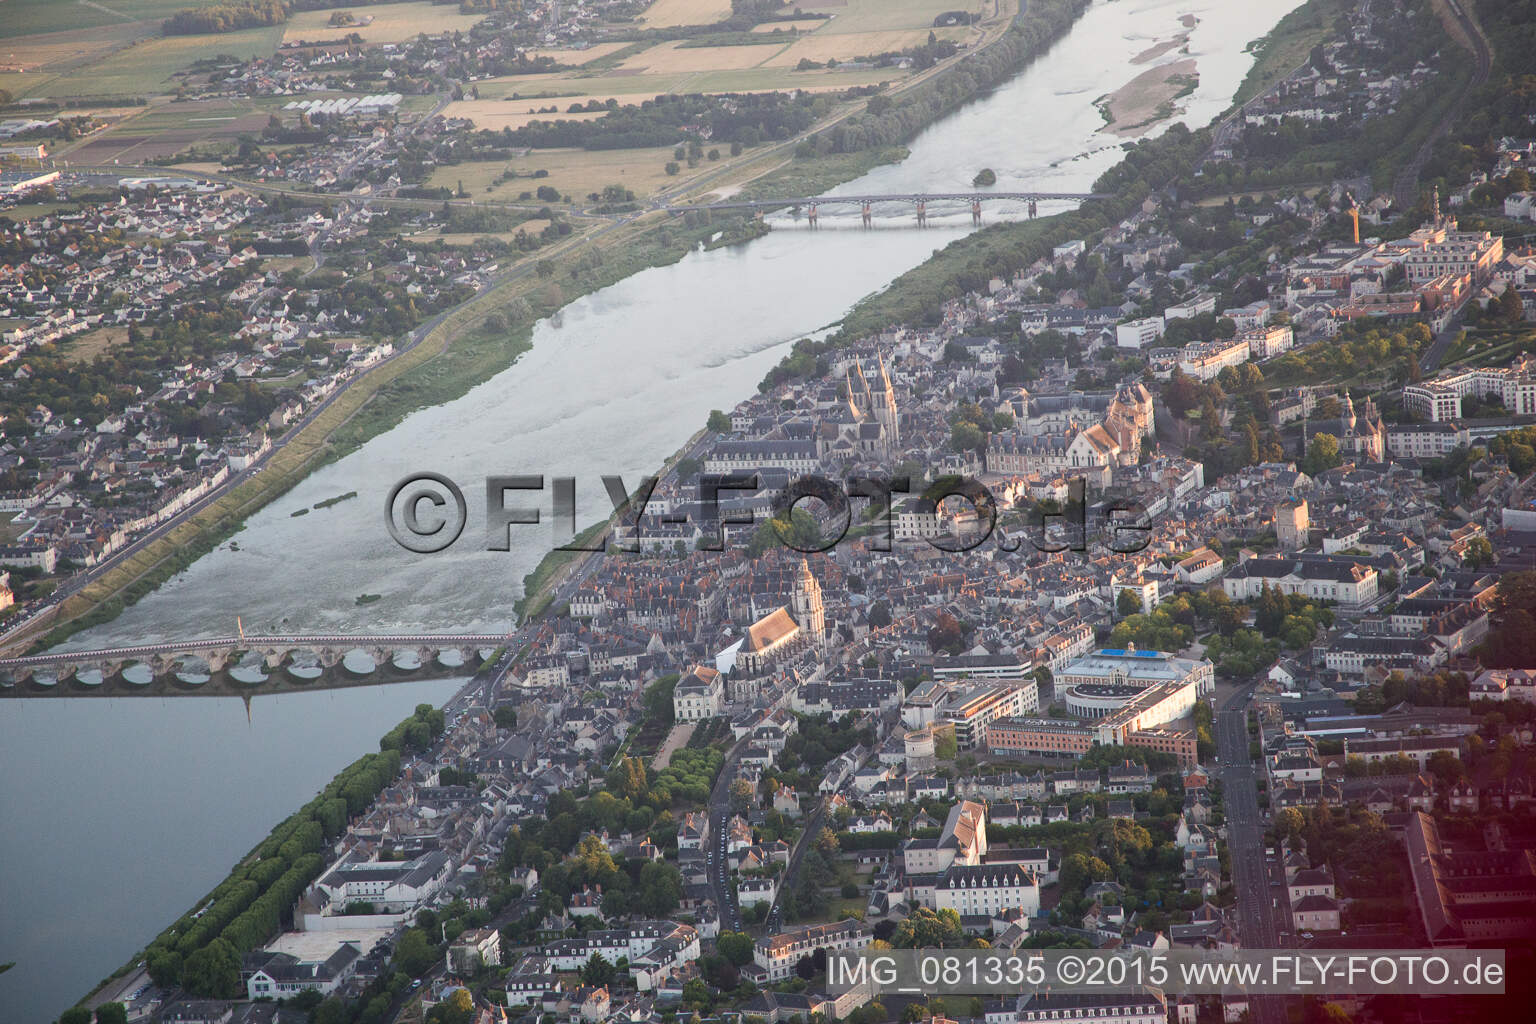 Blois in the state Loir et Cher, France